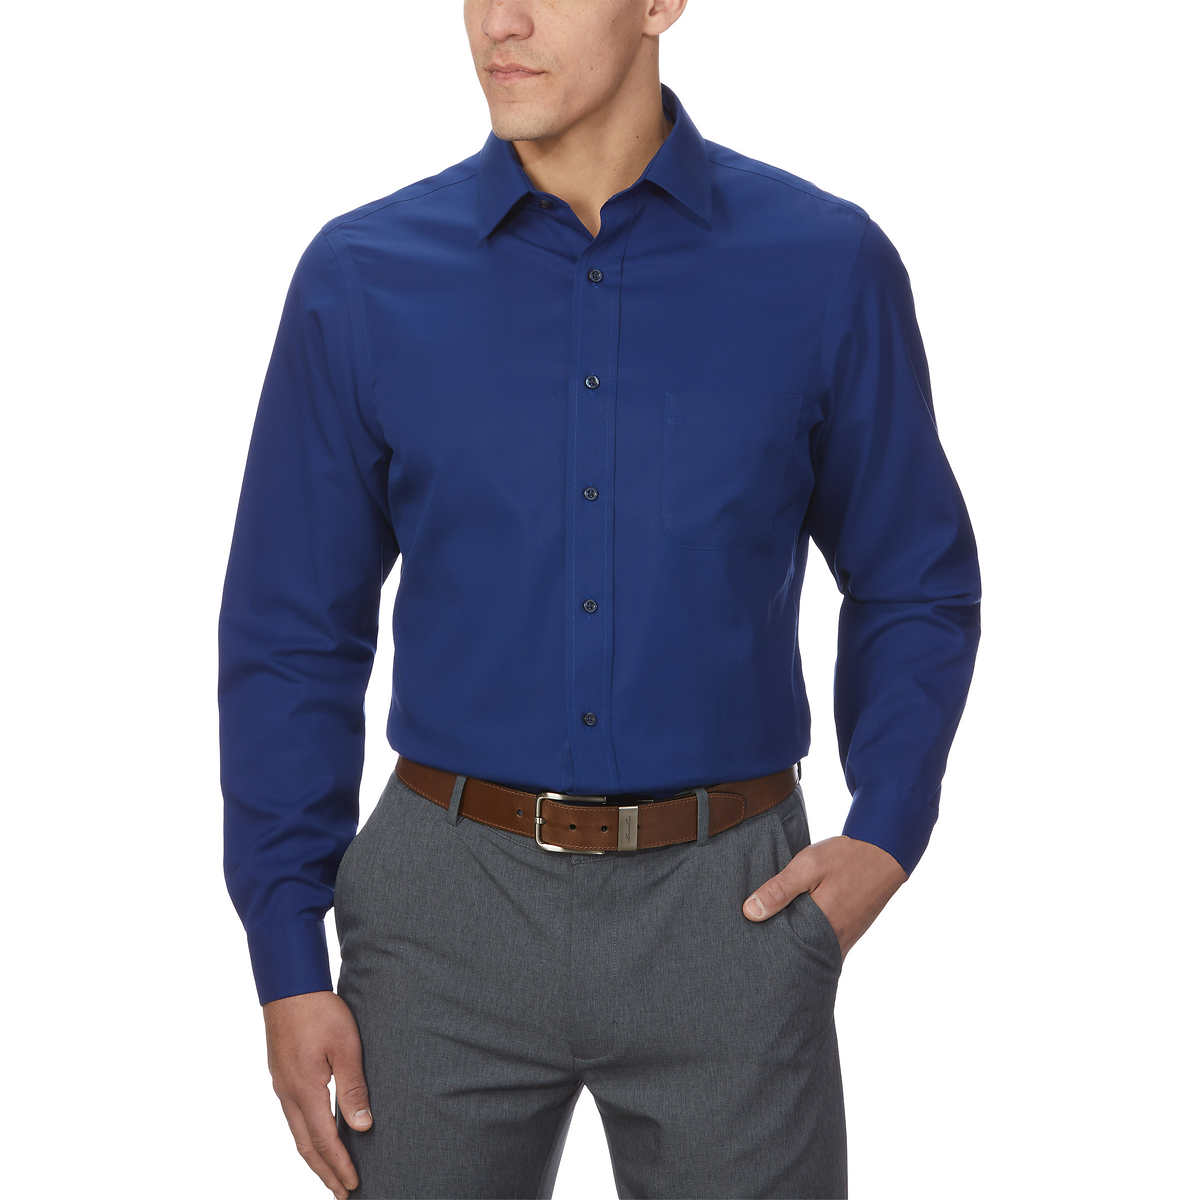 BNWT Kirkland Signature Men's shaped Fit spread collar cotton Dress Shirt Blue 